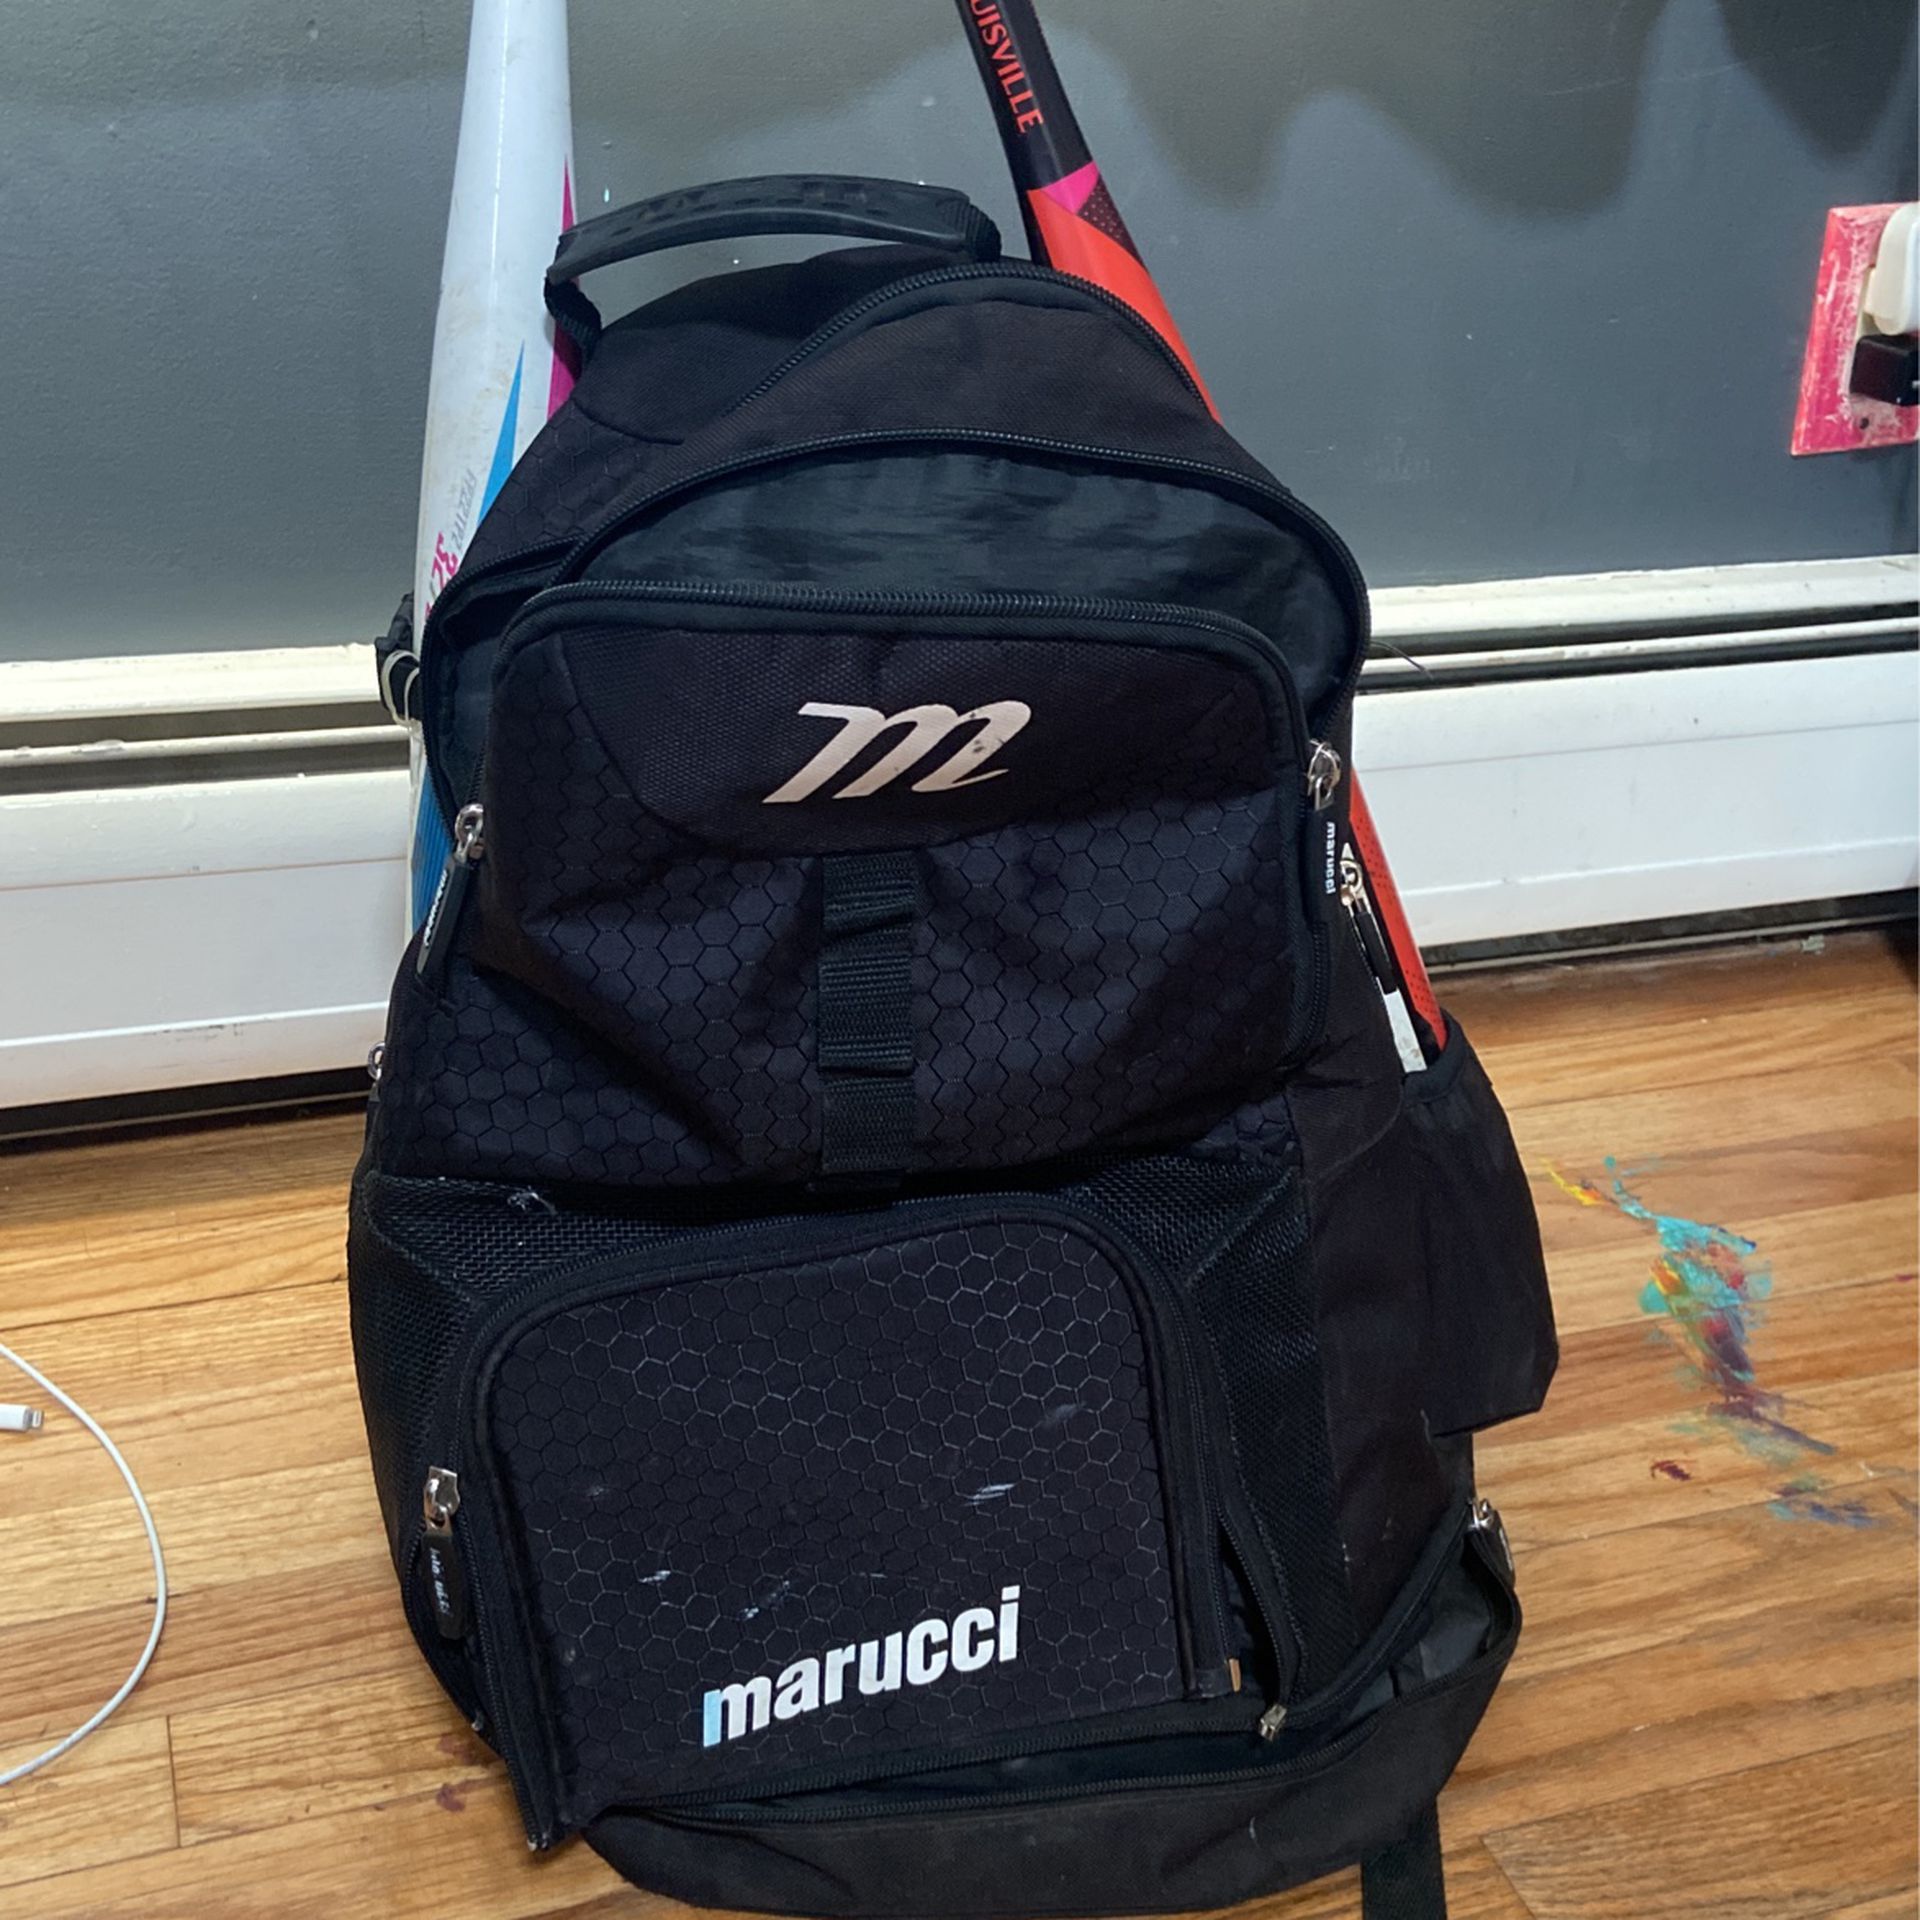 Softball Bag With Everything Needed 